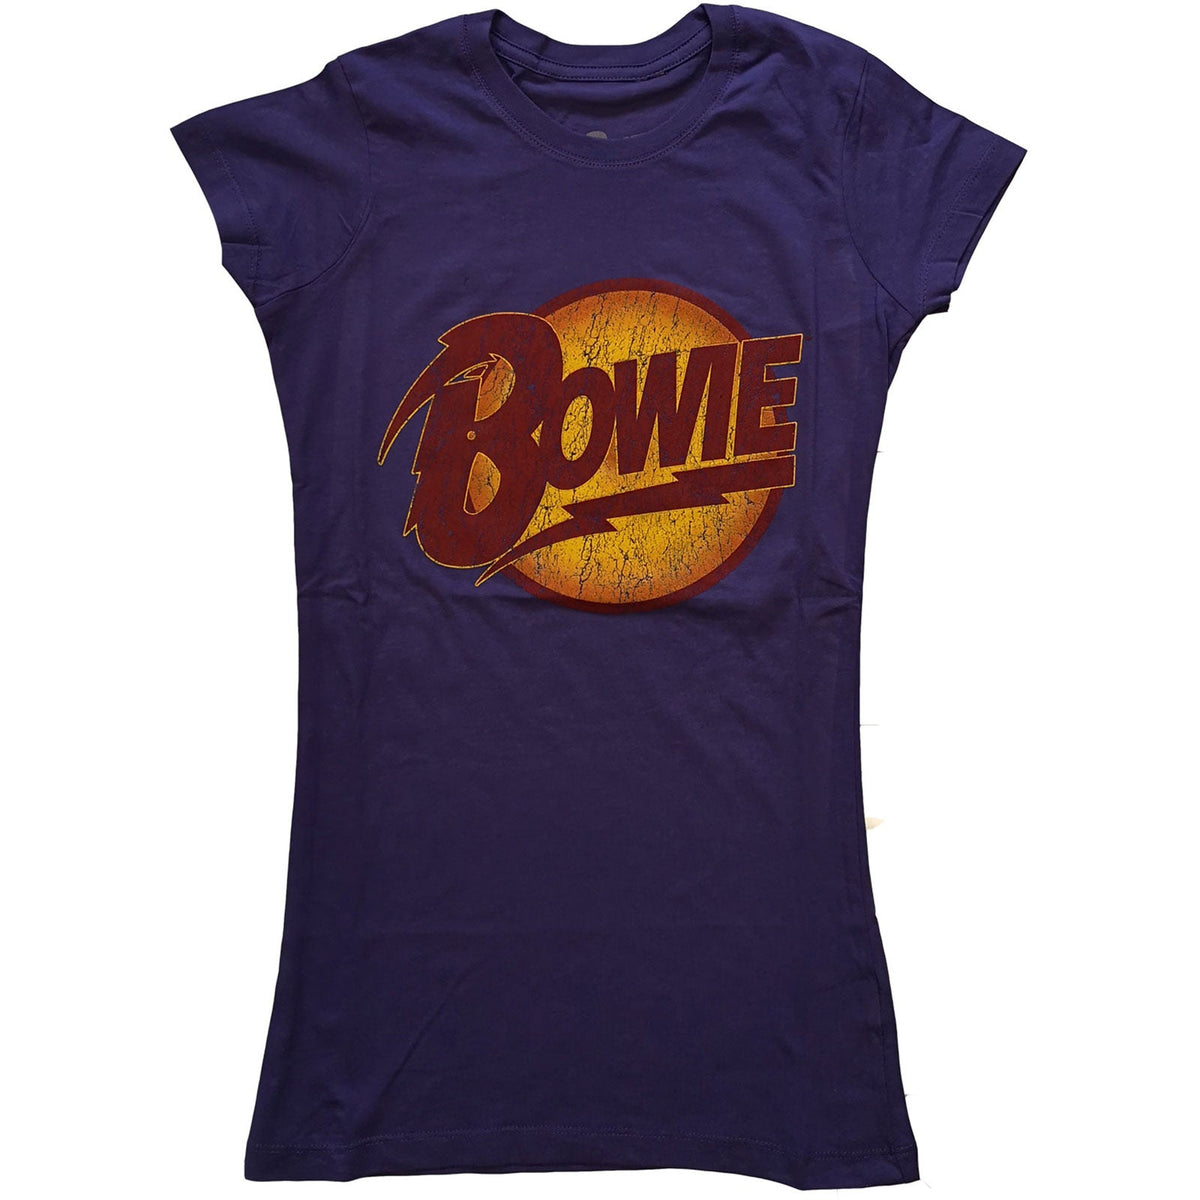 David Bowie Ladyfit T-Shirt - Vintage Diamond Dogs Logo Purple - Official Licensed Design - Jelly Frog